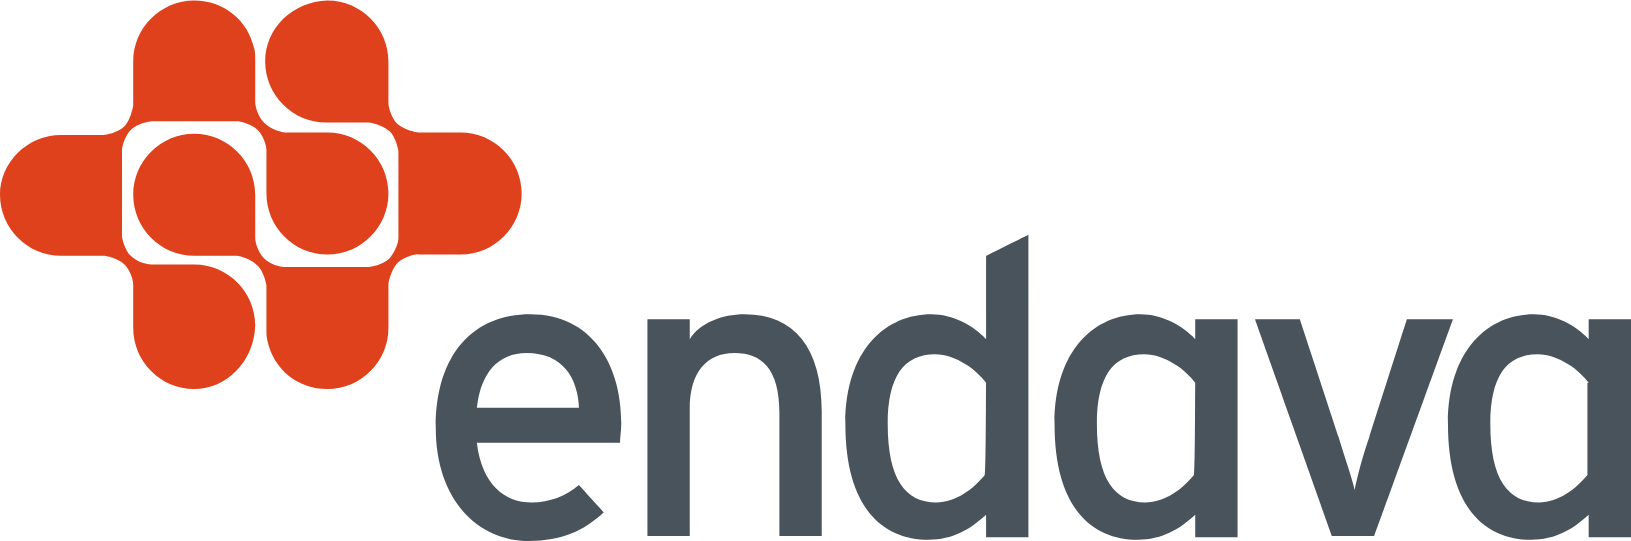 Endava logo large (transparent PNG)